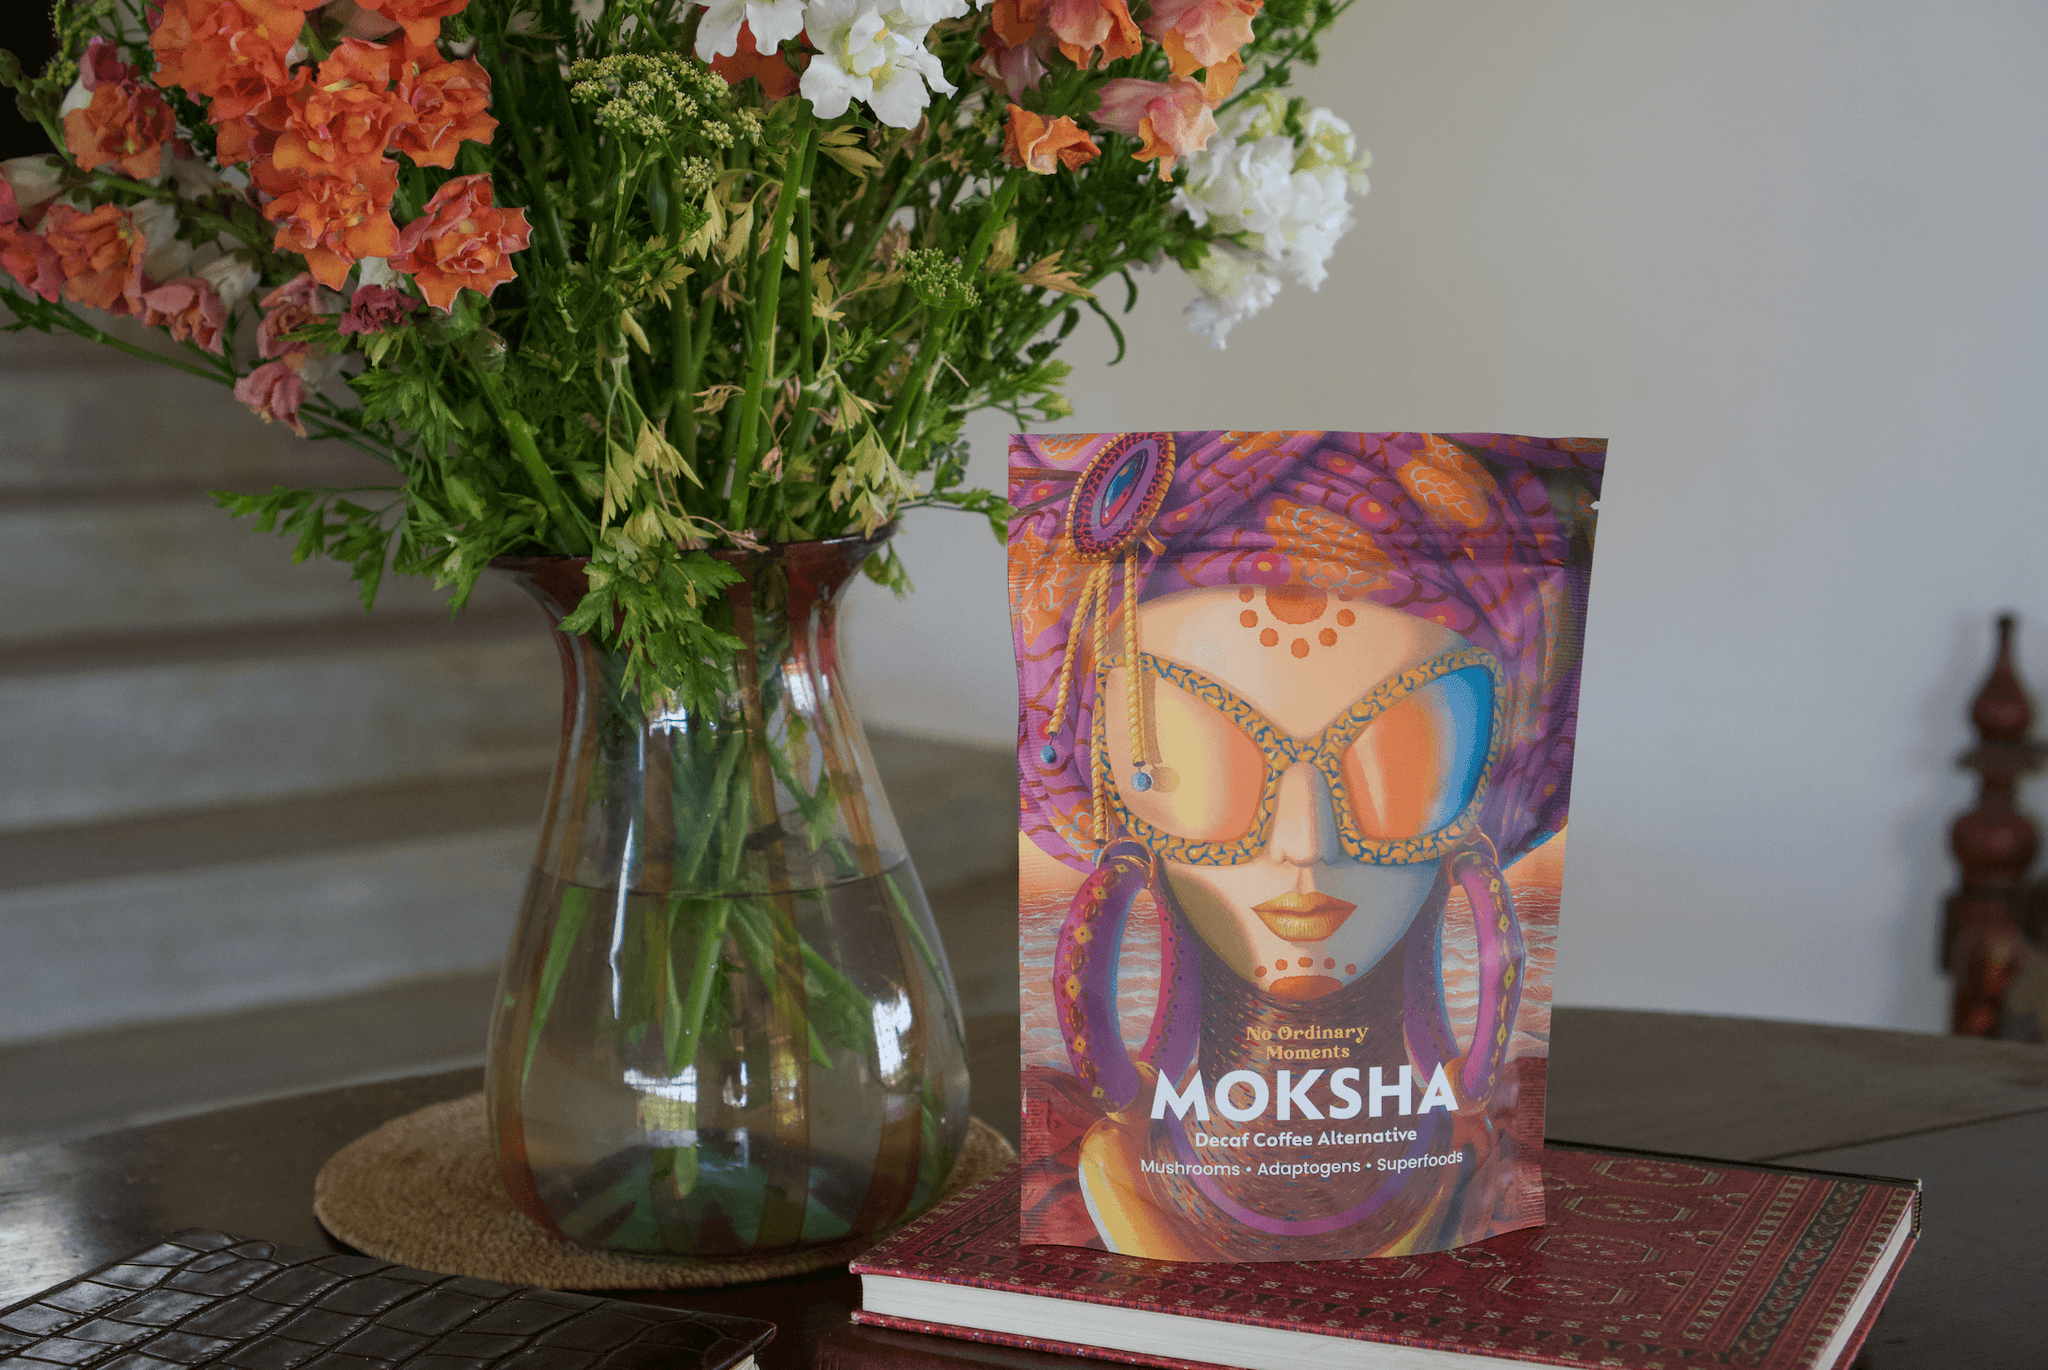 Mushroom Coffee Alternative UK - What is Moksha? - No Ordinary Moments